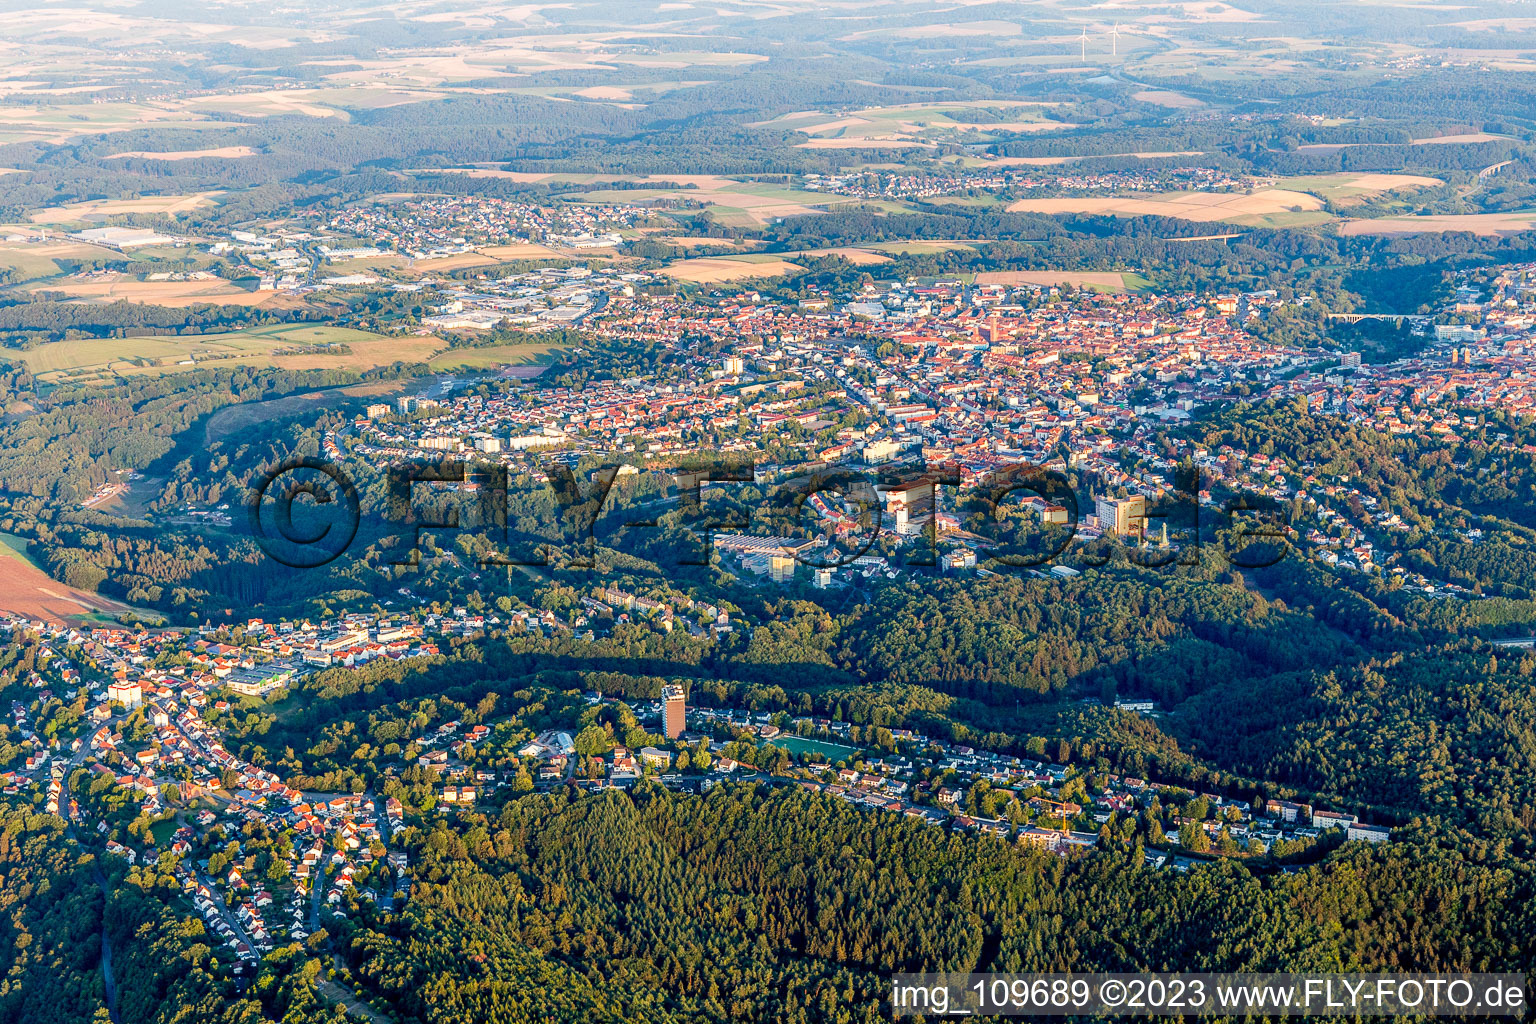 Pirmasens in the state Rhineland-Palatinate, Germany